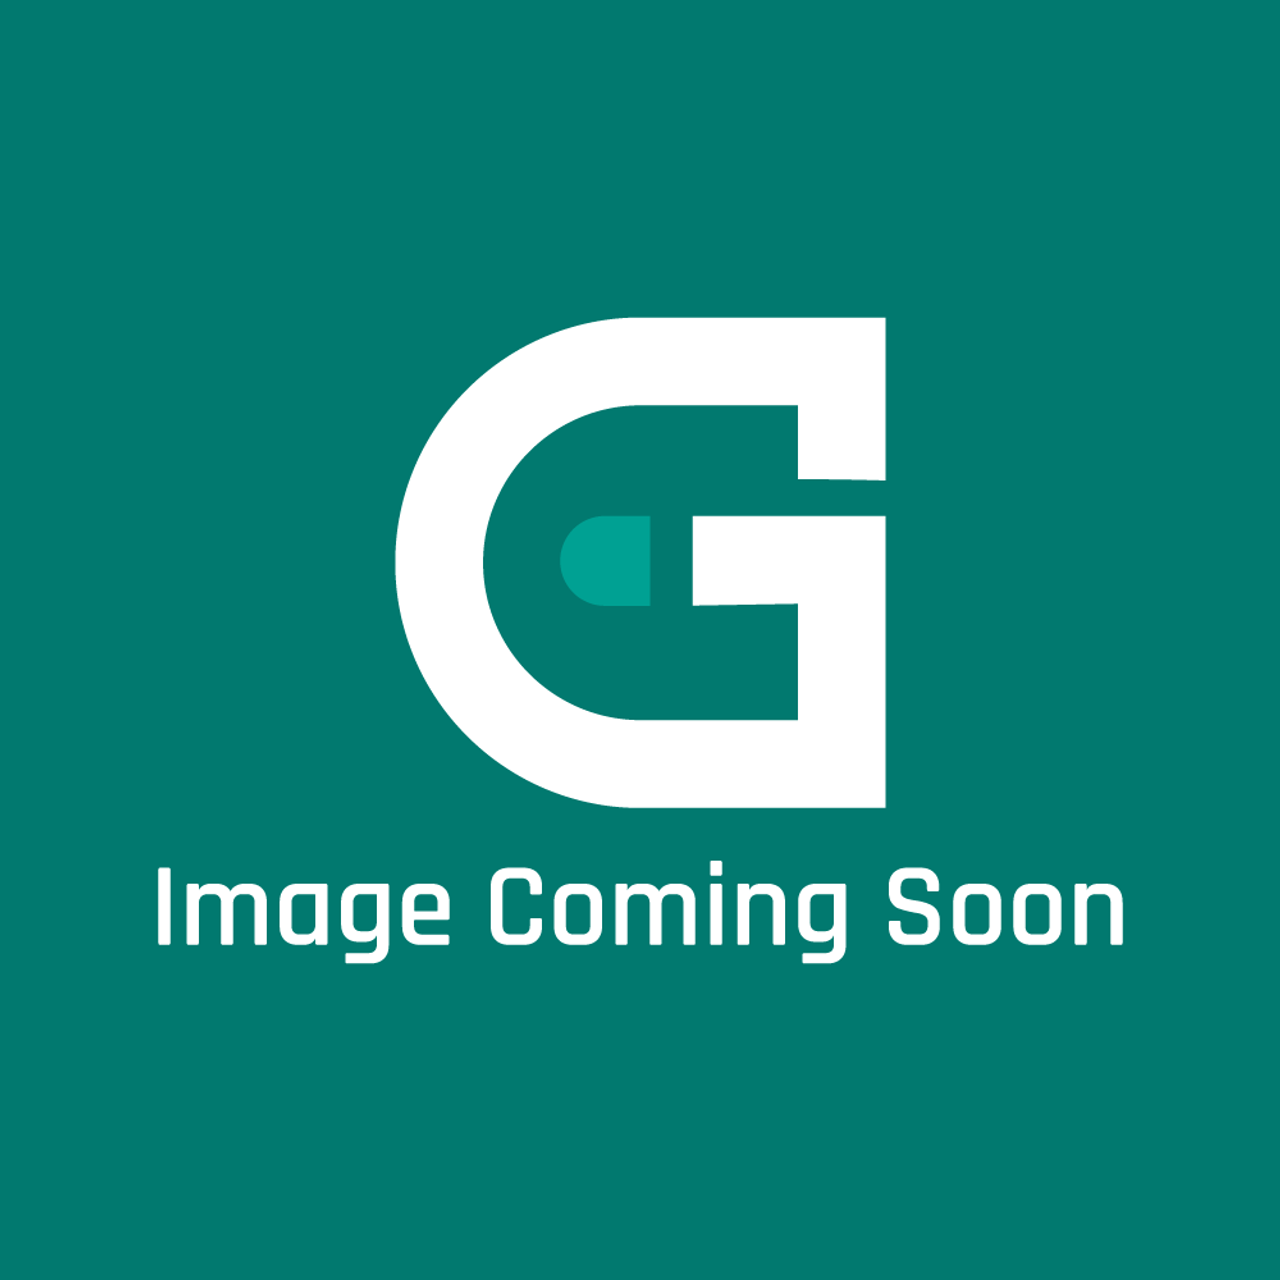 AGA Marvel R2591 - Simmering O/Dr Assy Prem01-133 - Image Coming Soon!